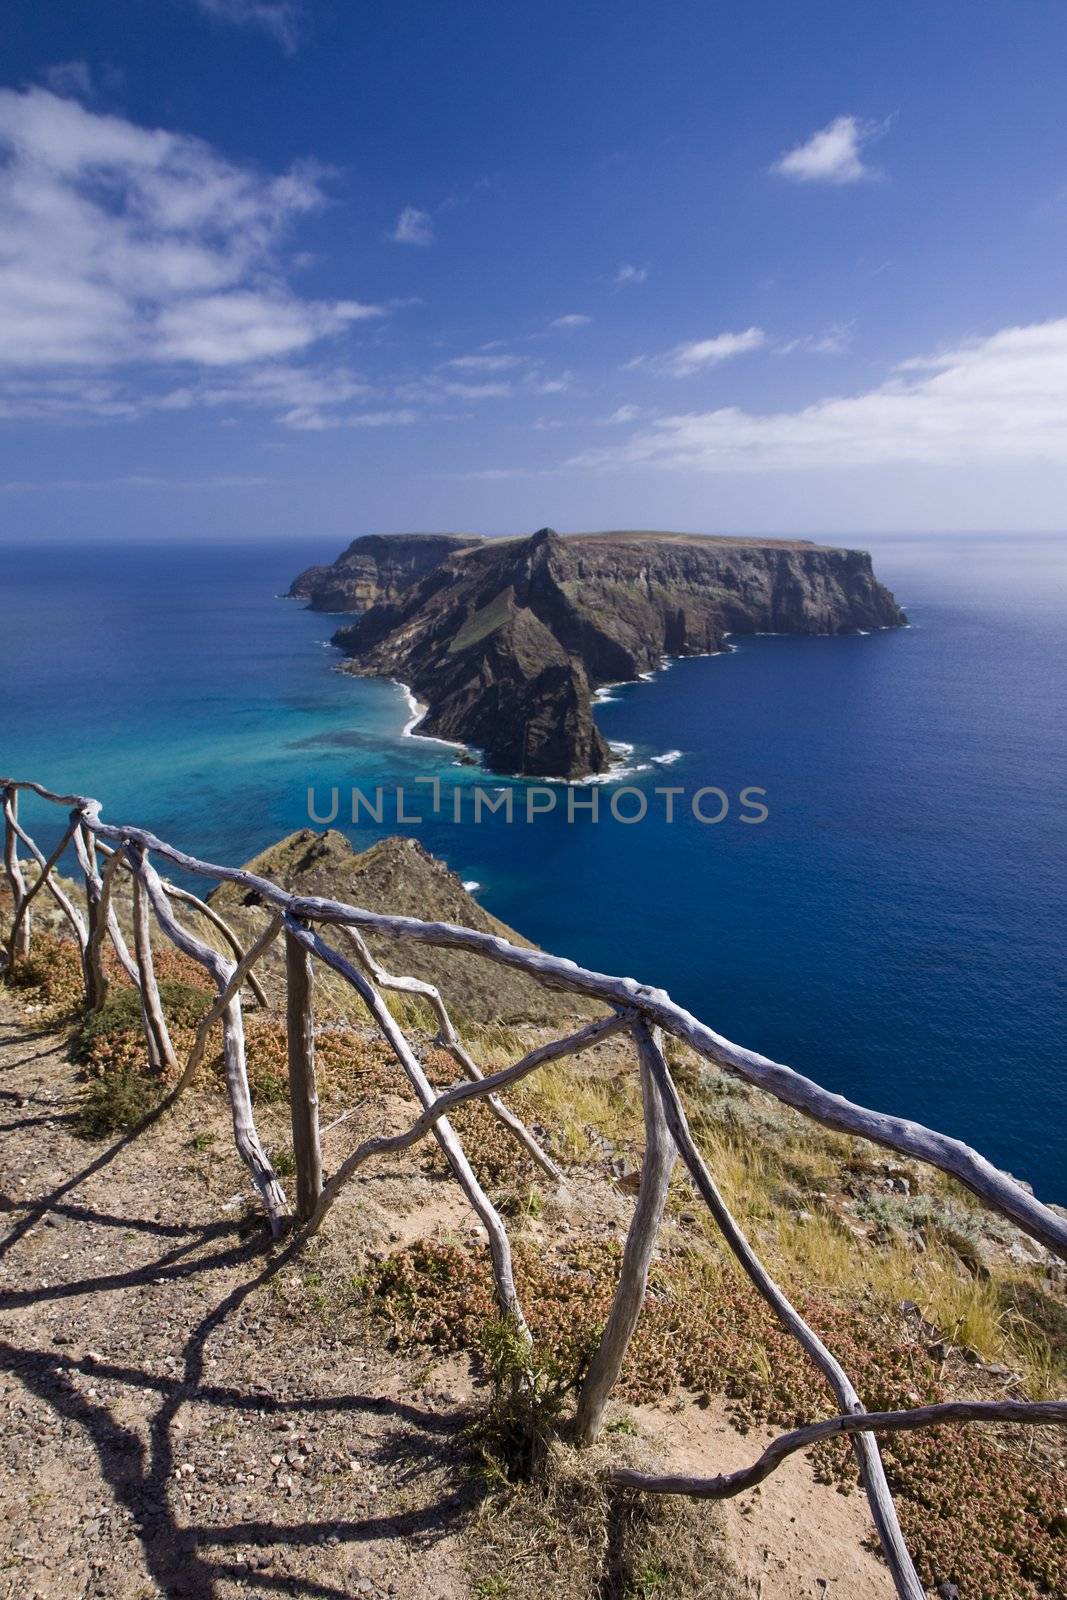 Ilheu da Cal, Porto Santo, Madeira islands in Portugal